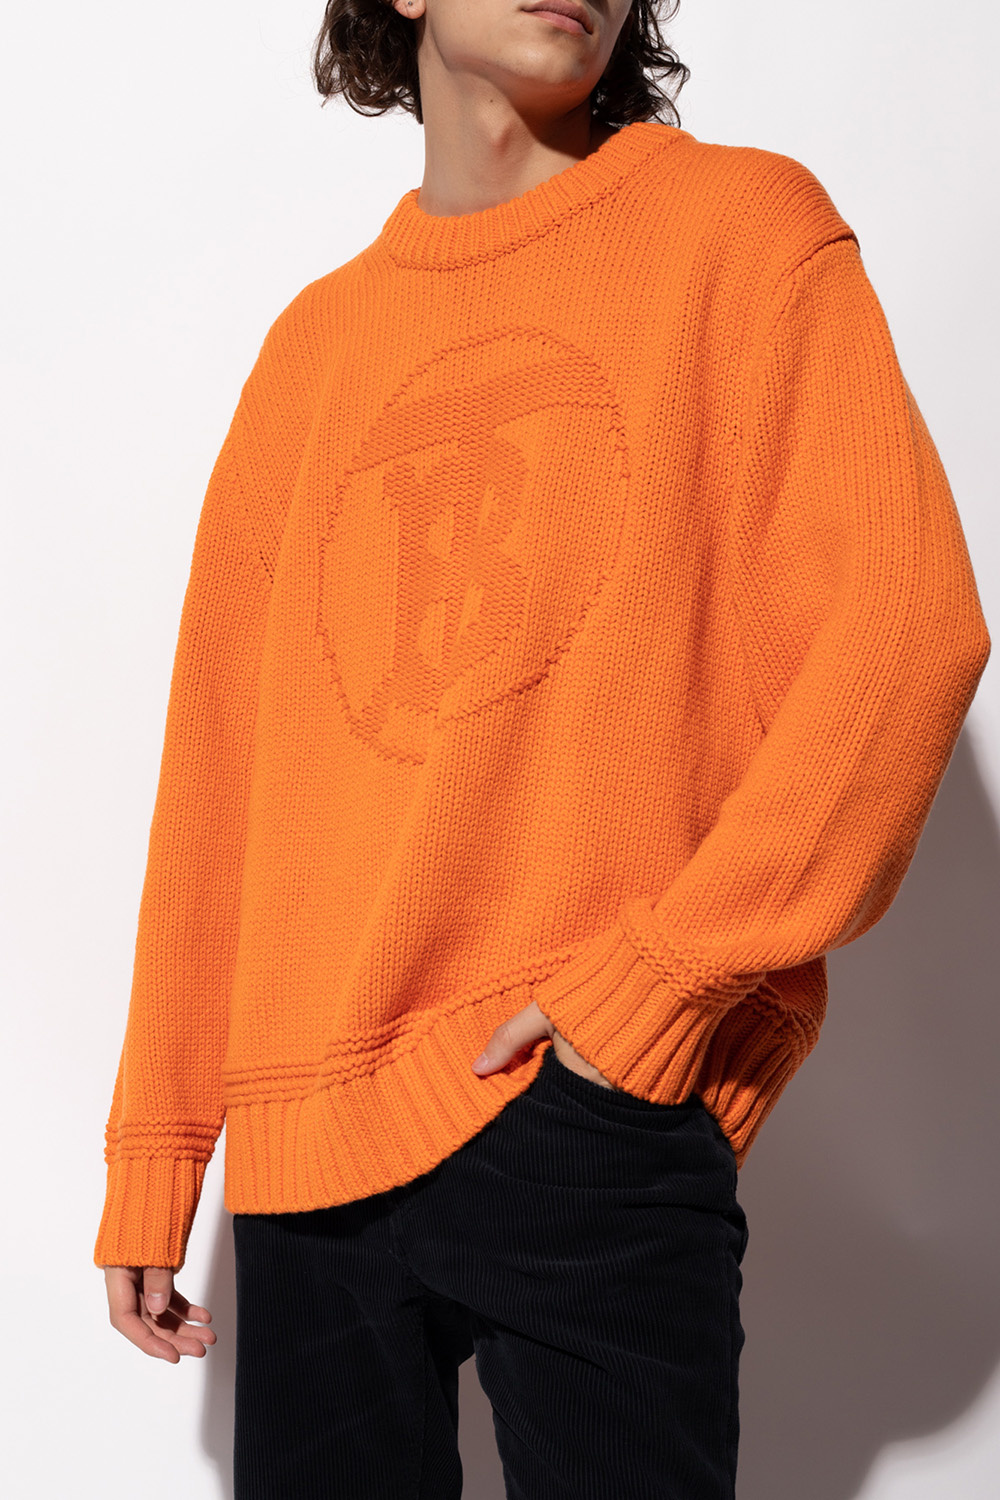 Actualizar 38+ imagen burberry orange sweater